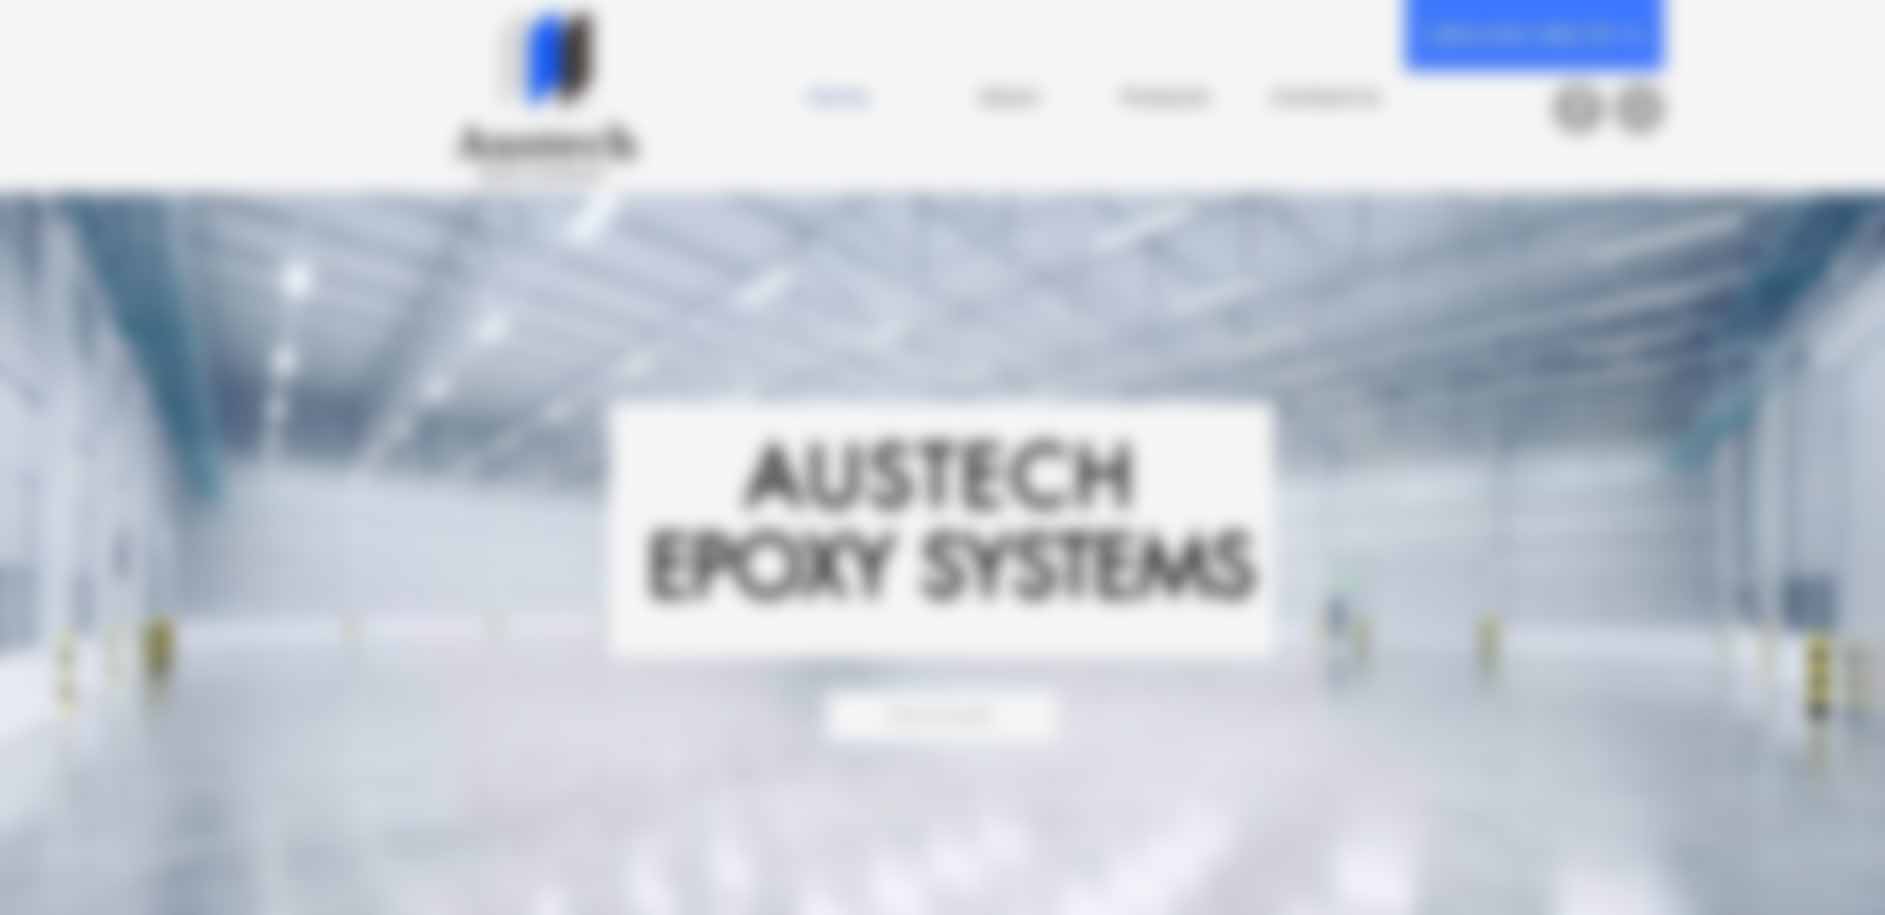 Austech Epoxy Systems